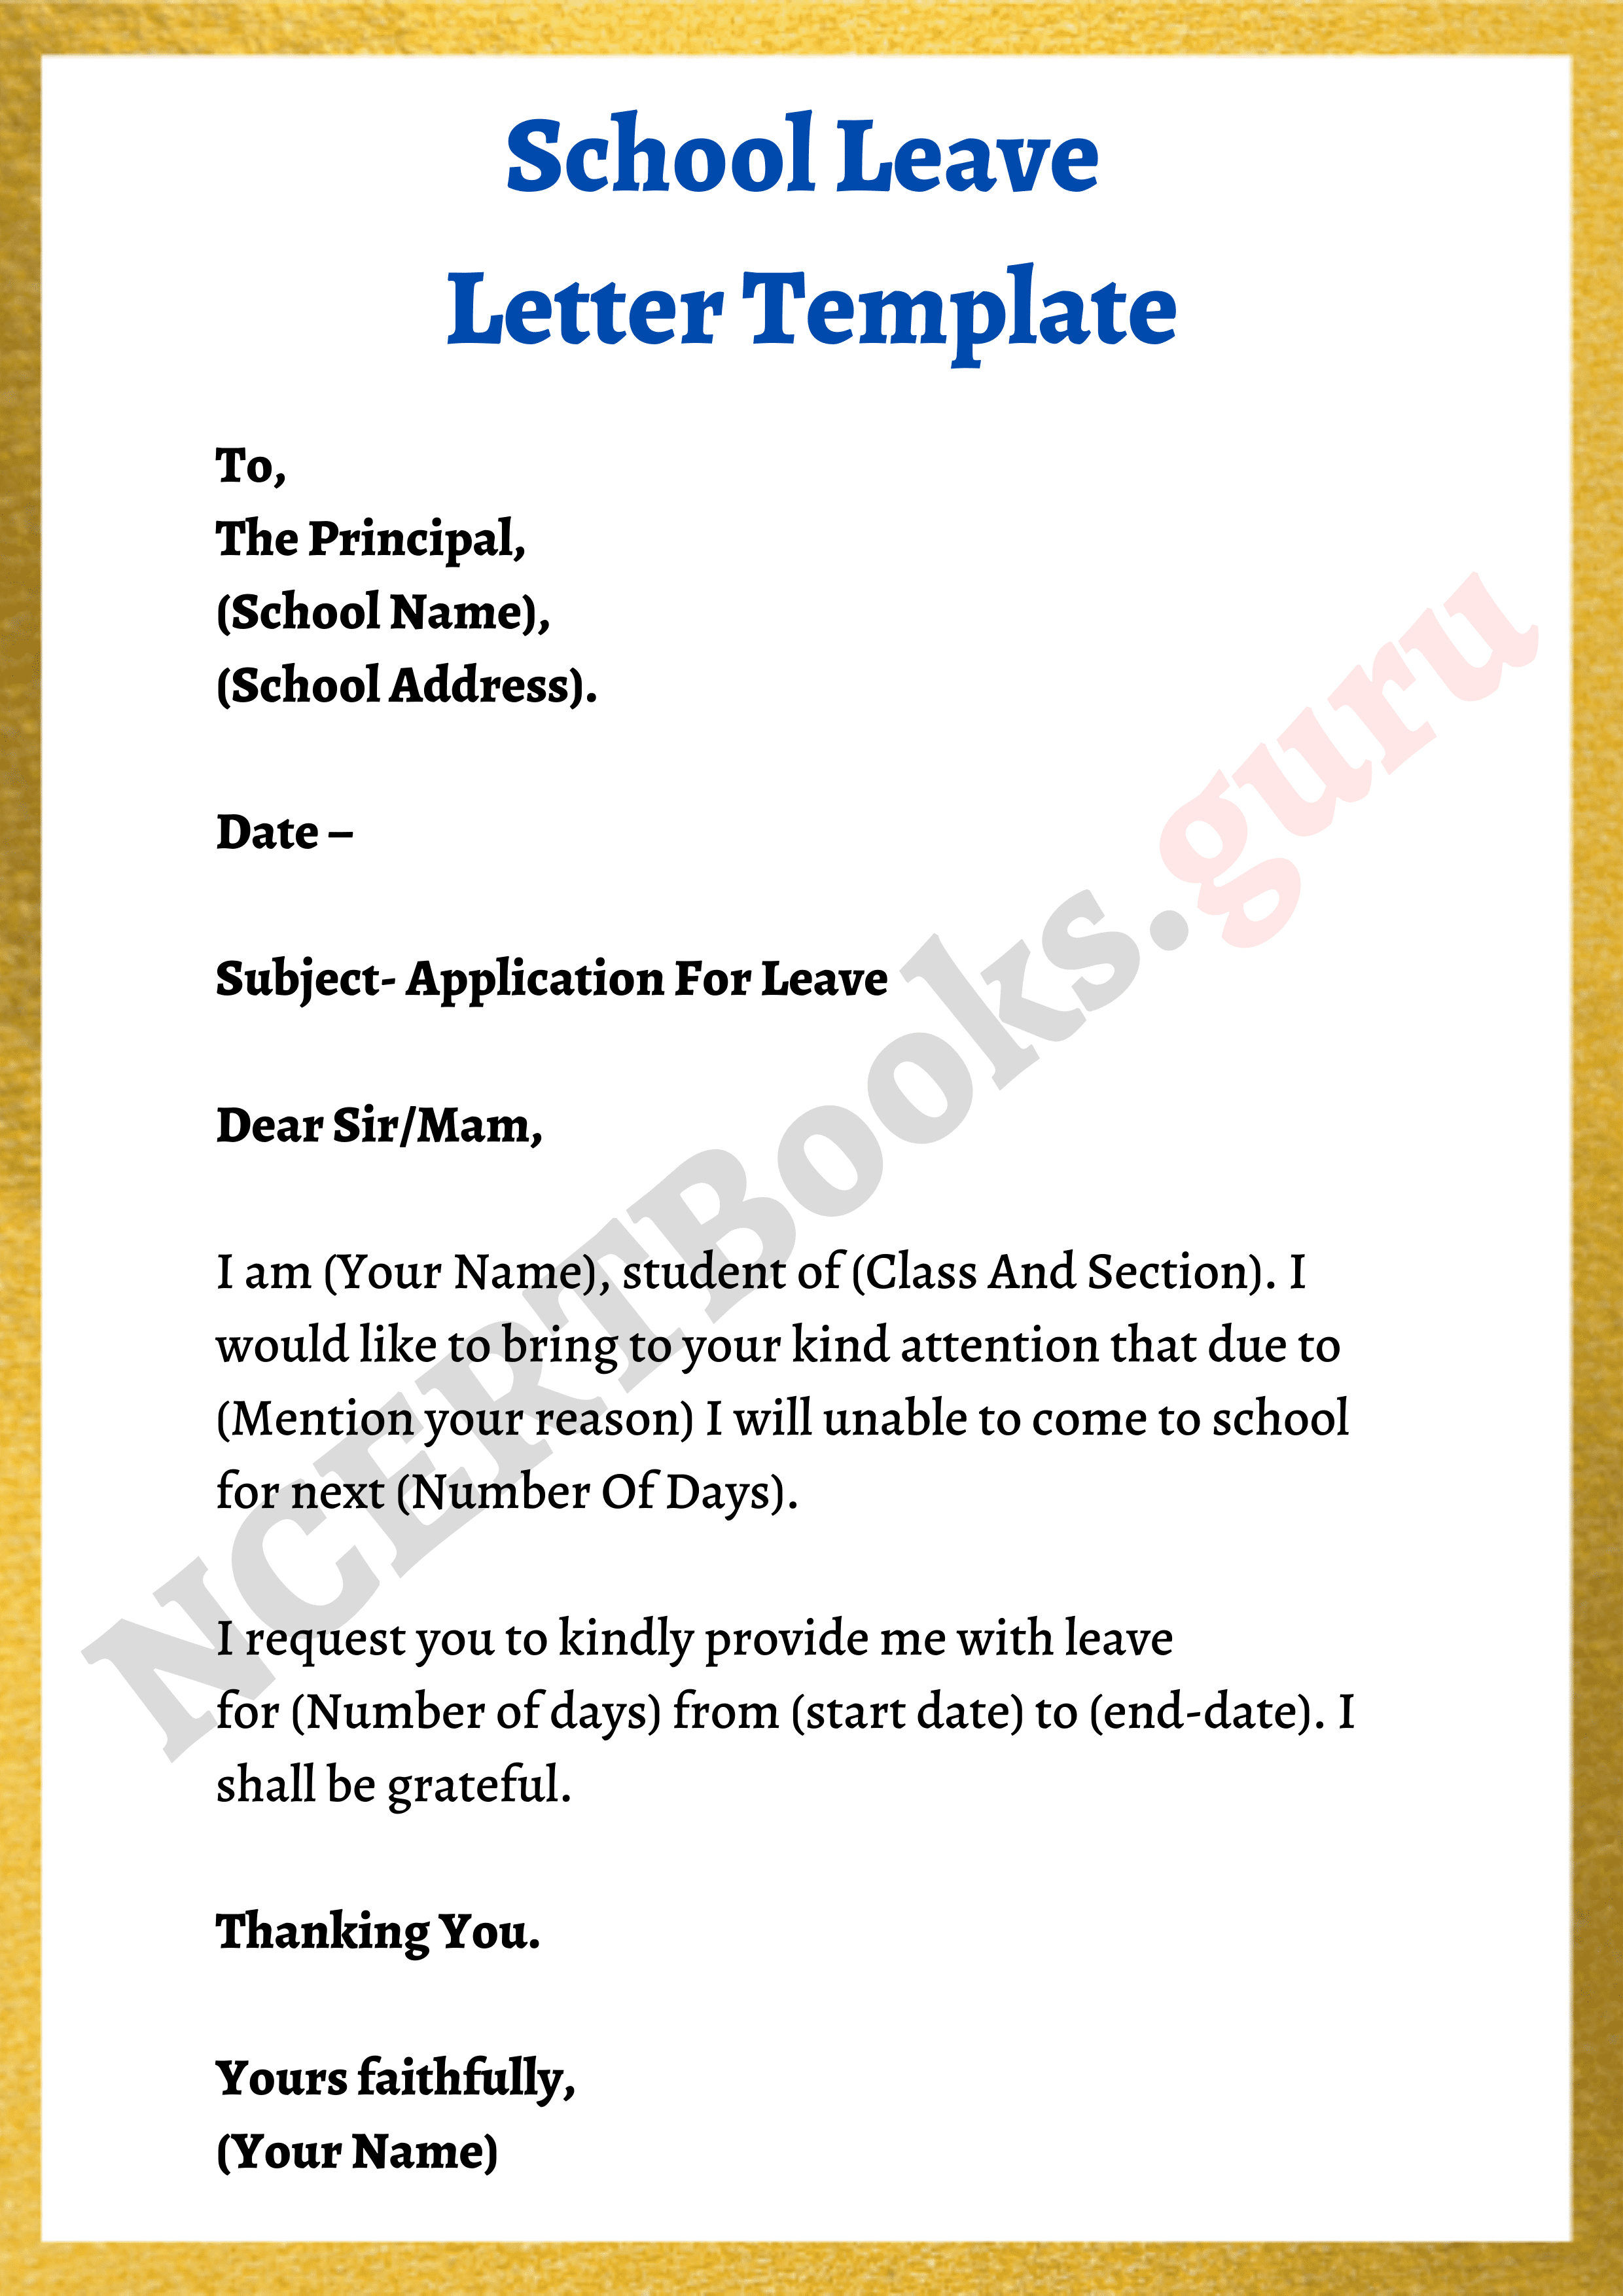 job application letter for a school leaver